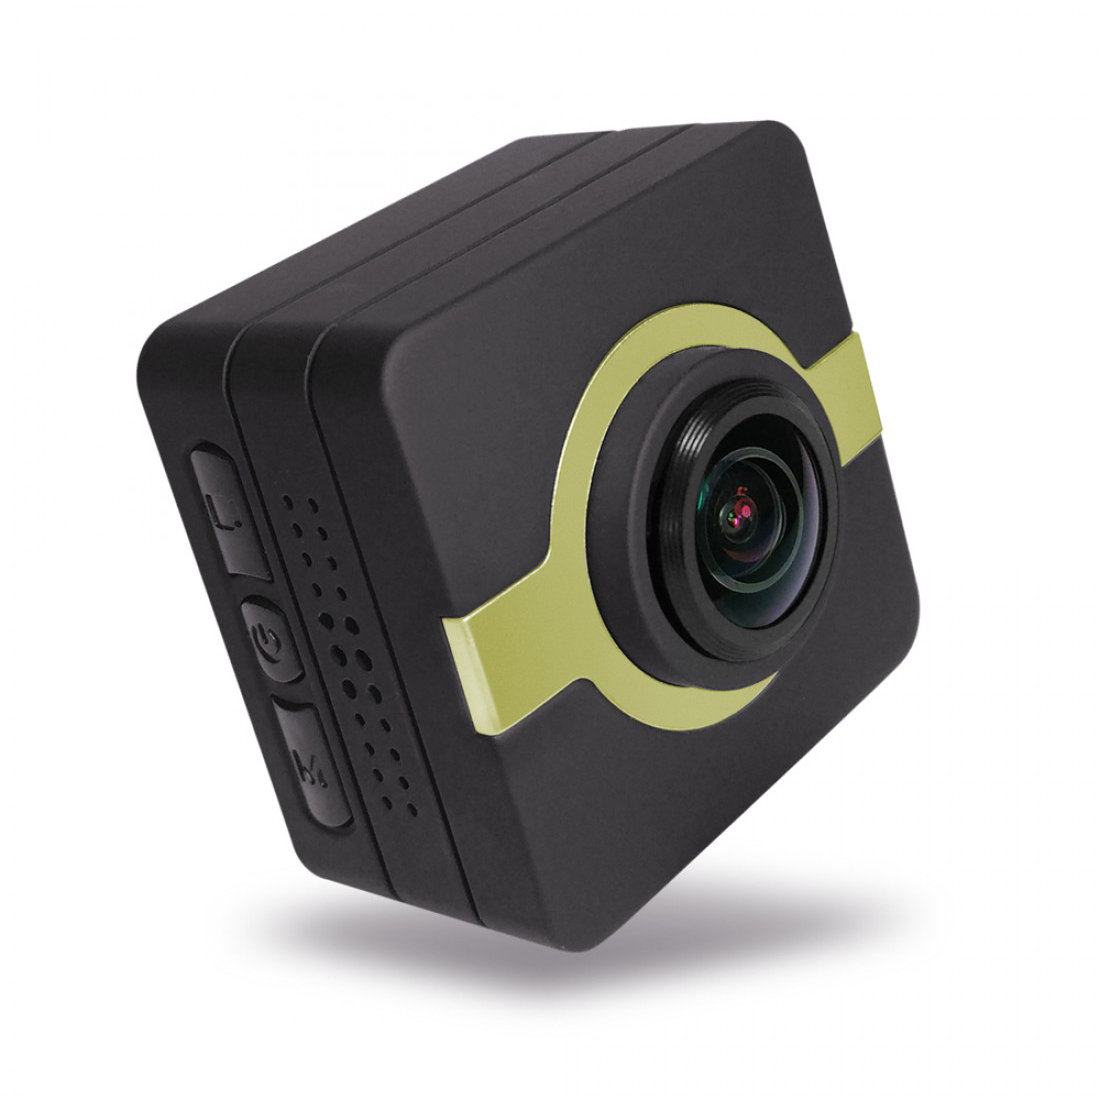 Matecam X1 WIFI מצלמה מתחת למים 4K -HI HD 1080P מצלמת פעולה עמידה למים לרכיבה, מרוצים, סקי, אופנוע, מוטוקרוס וספורט מים מיני DVR מפתחות לרכב מיקרו RC מצלמת אופני קסדת מצלמת ירוק